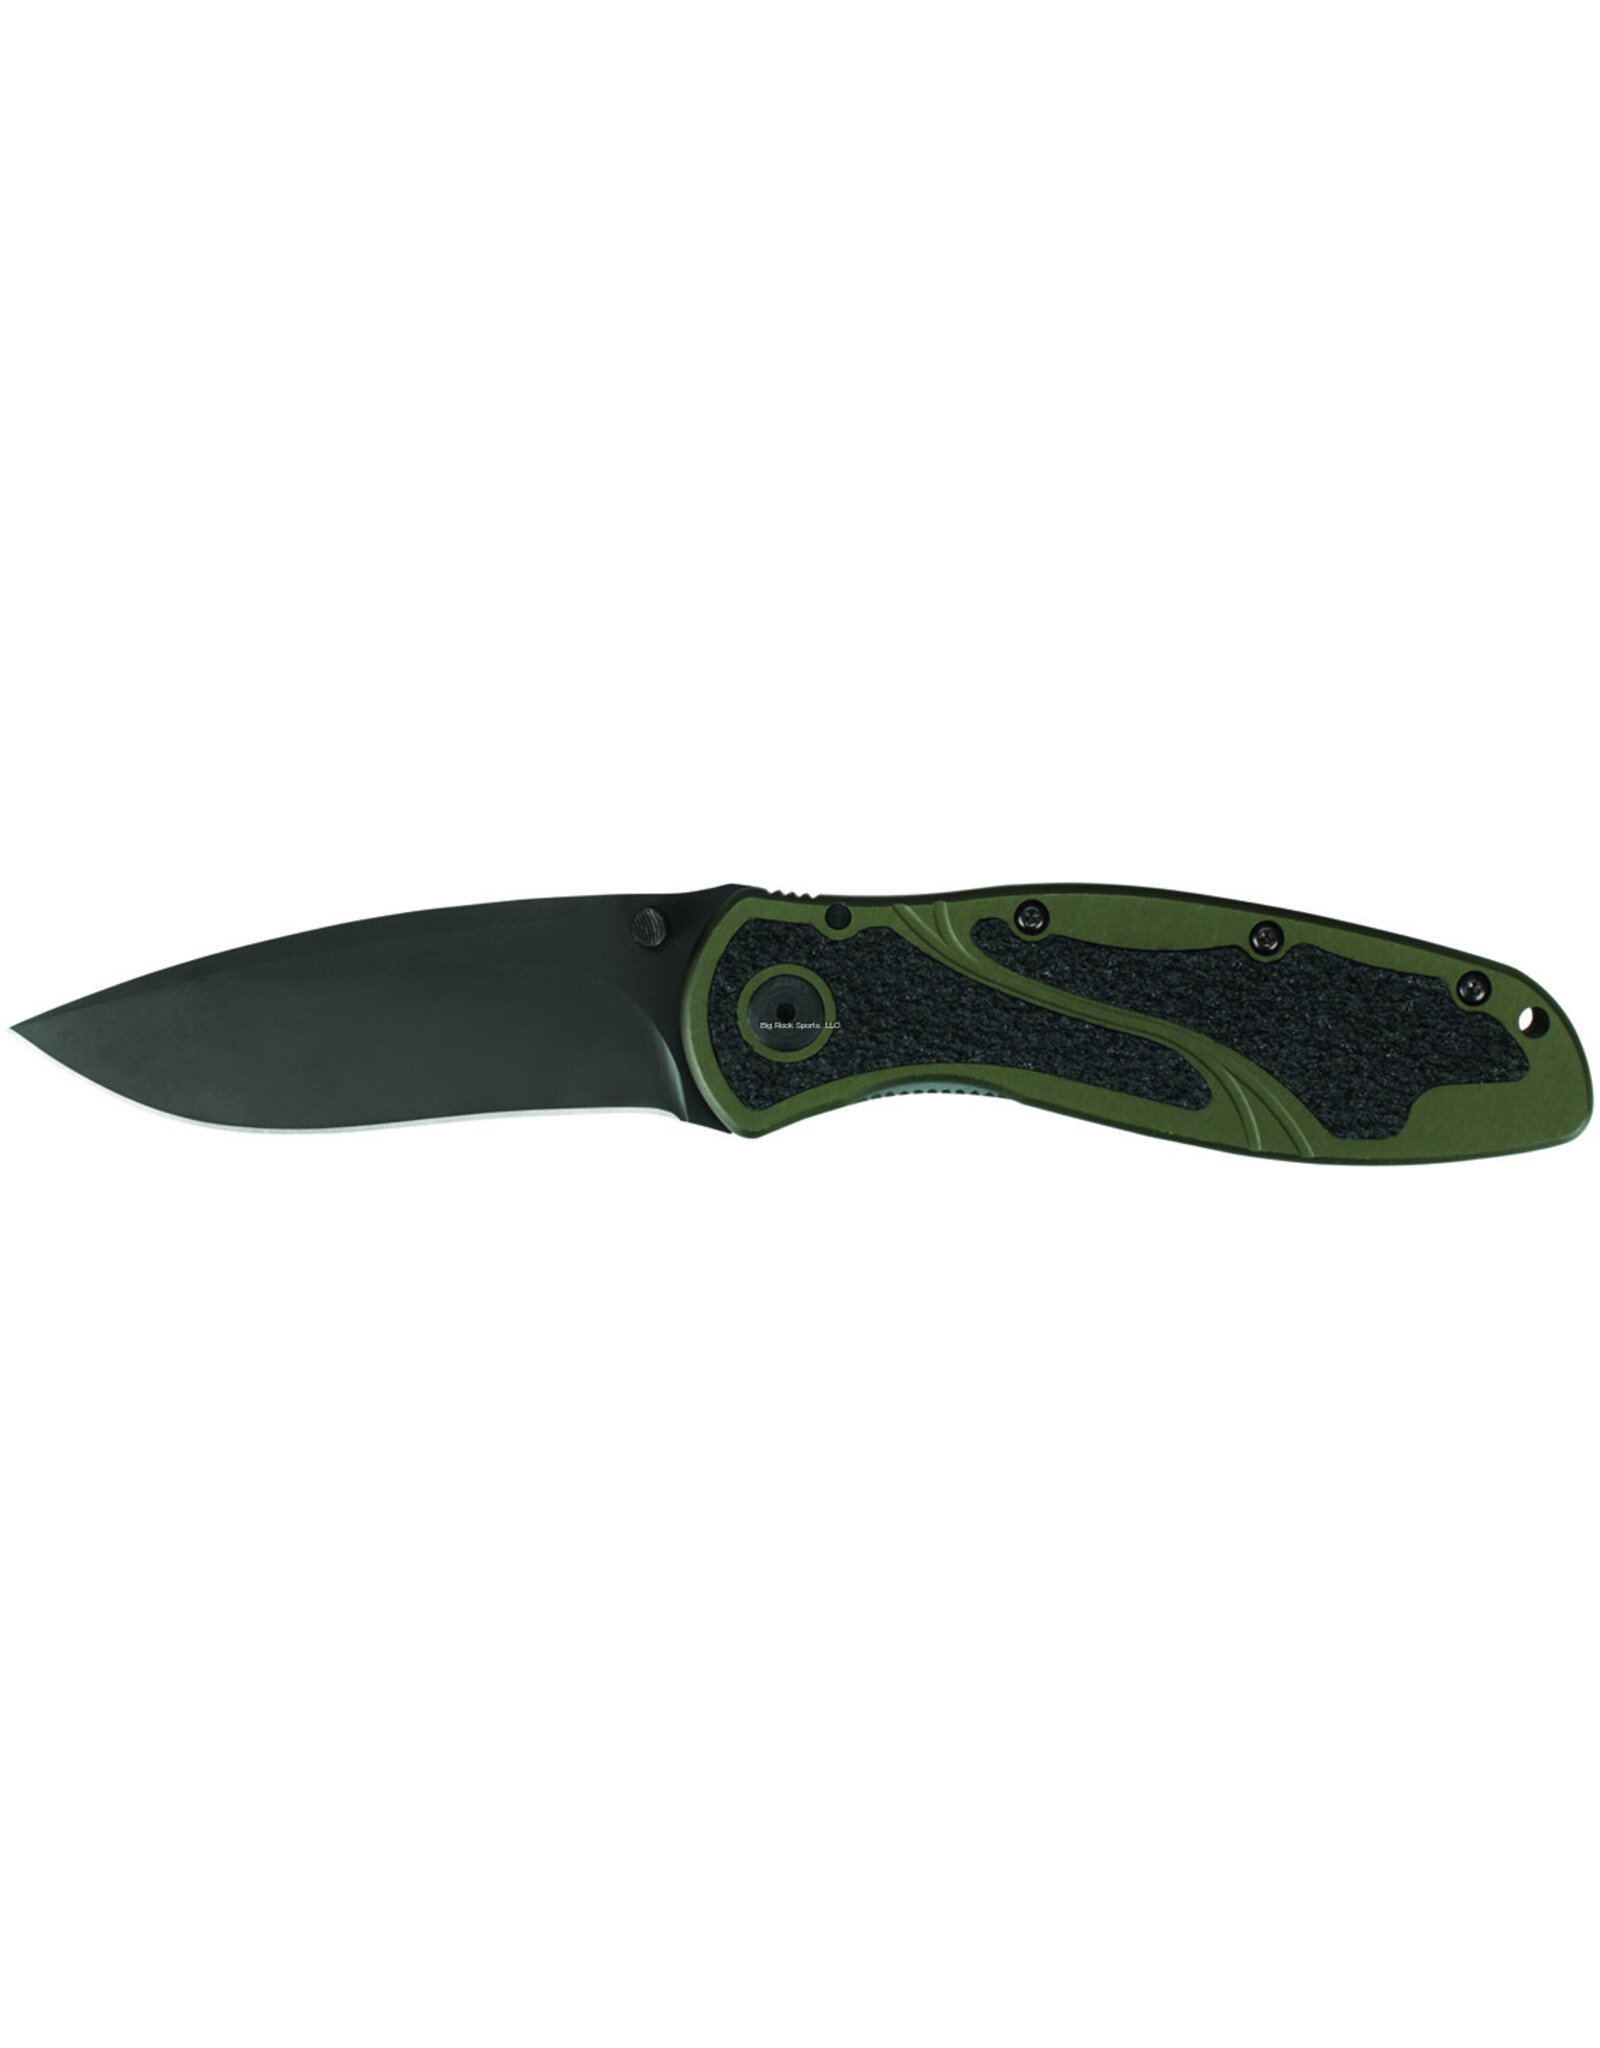 kershaw Kershaw 1670OLBLK Blur Folding Knife, 3.4" Blade, Olive Handle/Black Blade